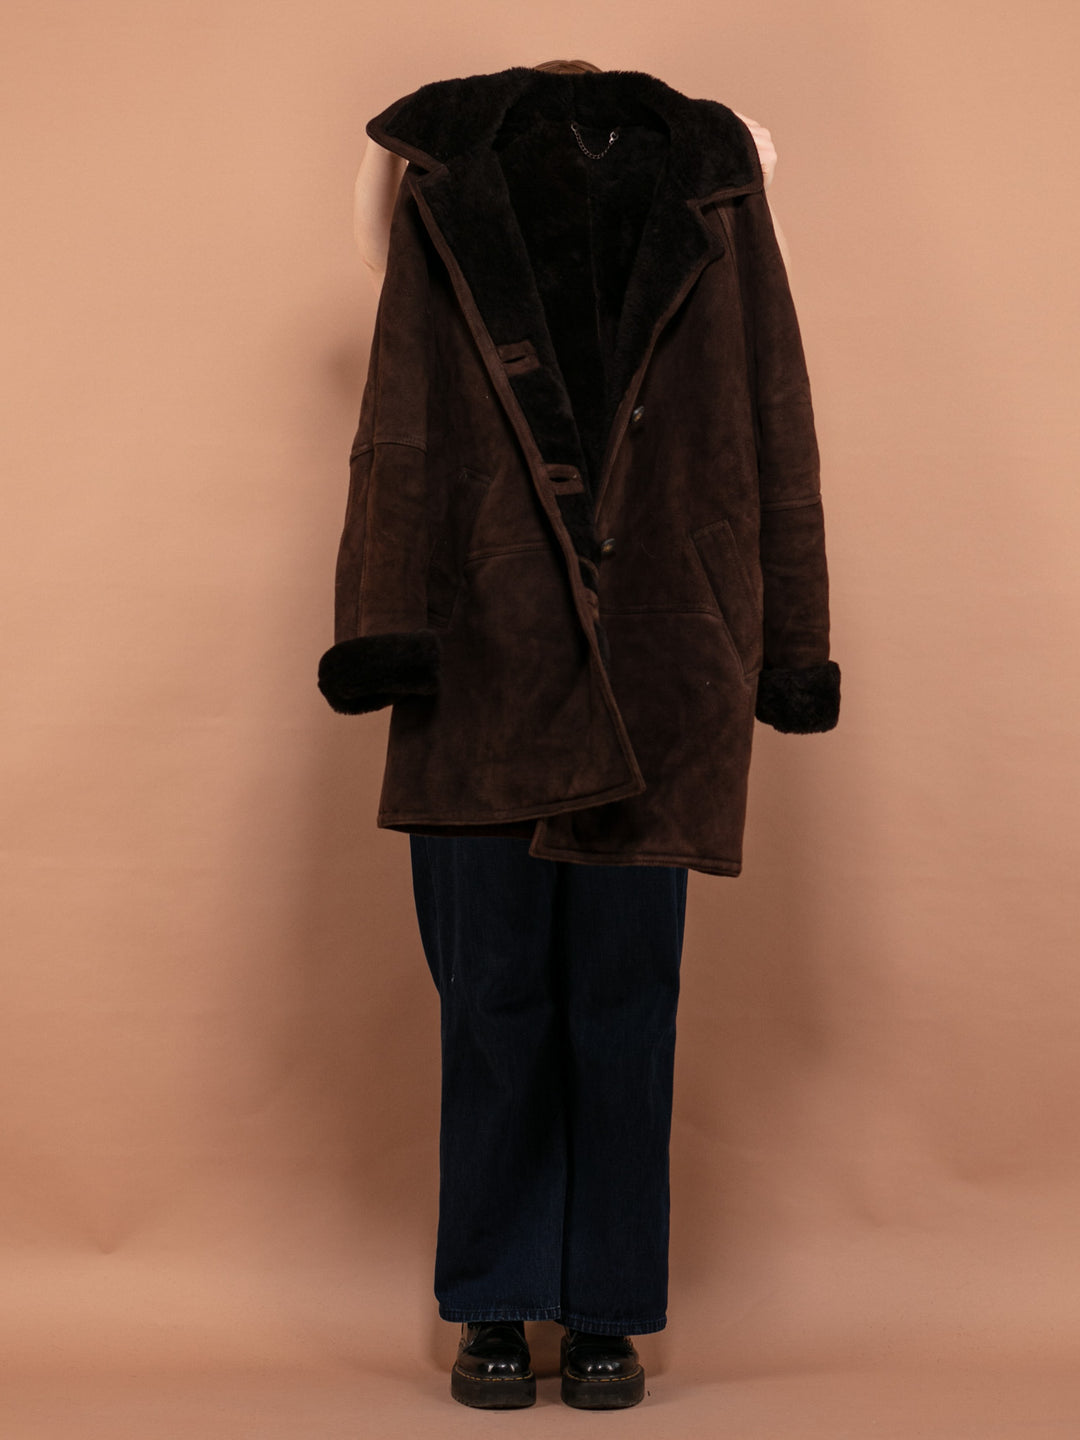 Oversized Shearling Coat 90's, Size XL, Vintage Women Sheepskin Coat, Dark Brown Suede Winter Coat, Outerwear, Cozy Coat, Lammy Coat